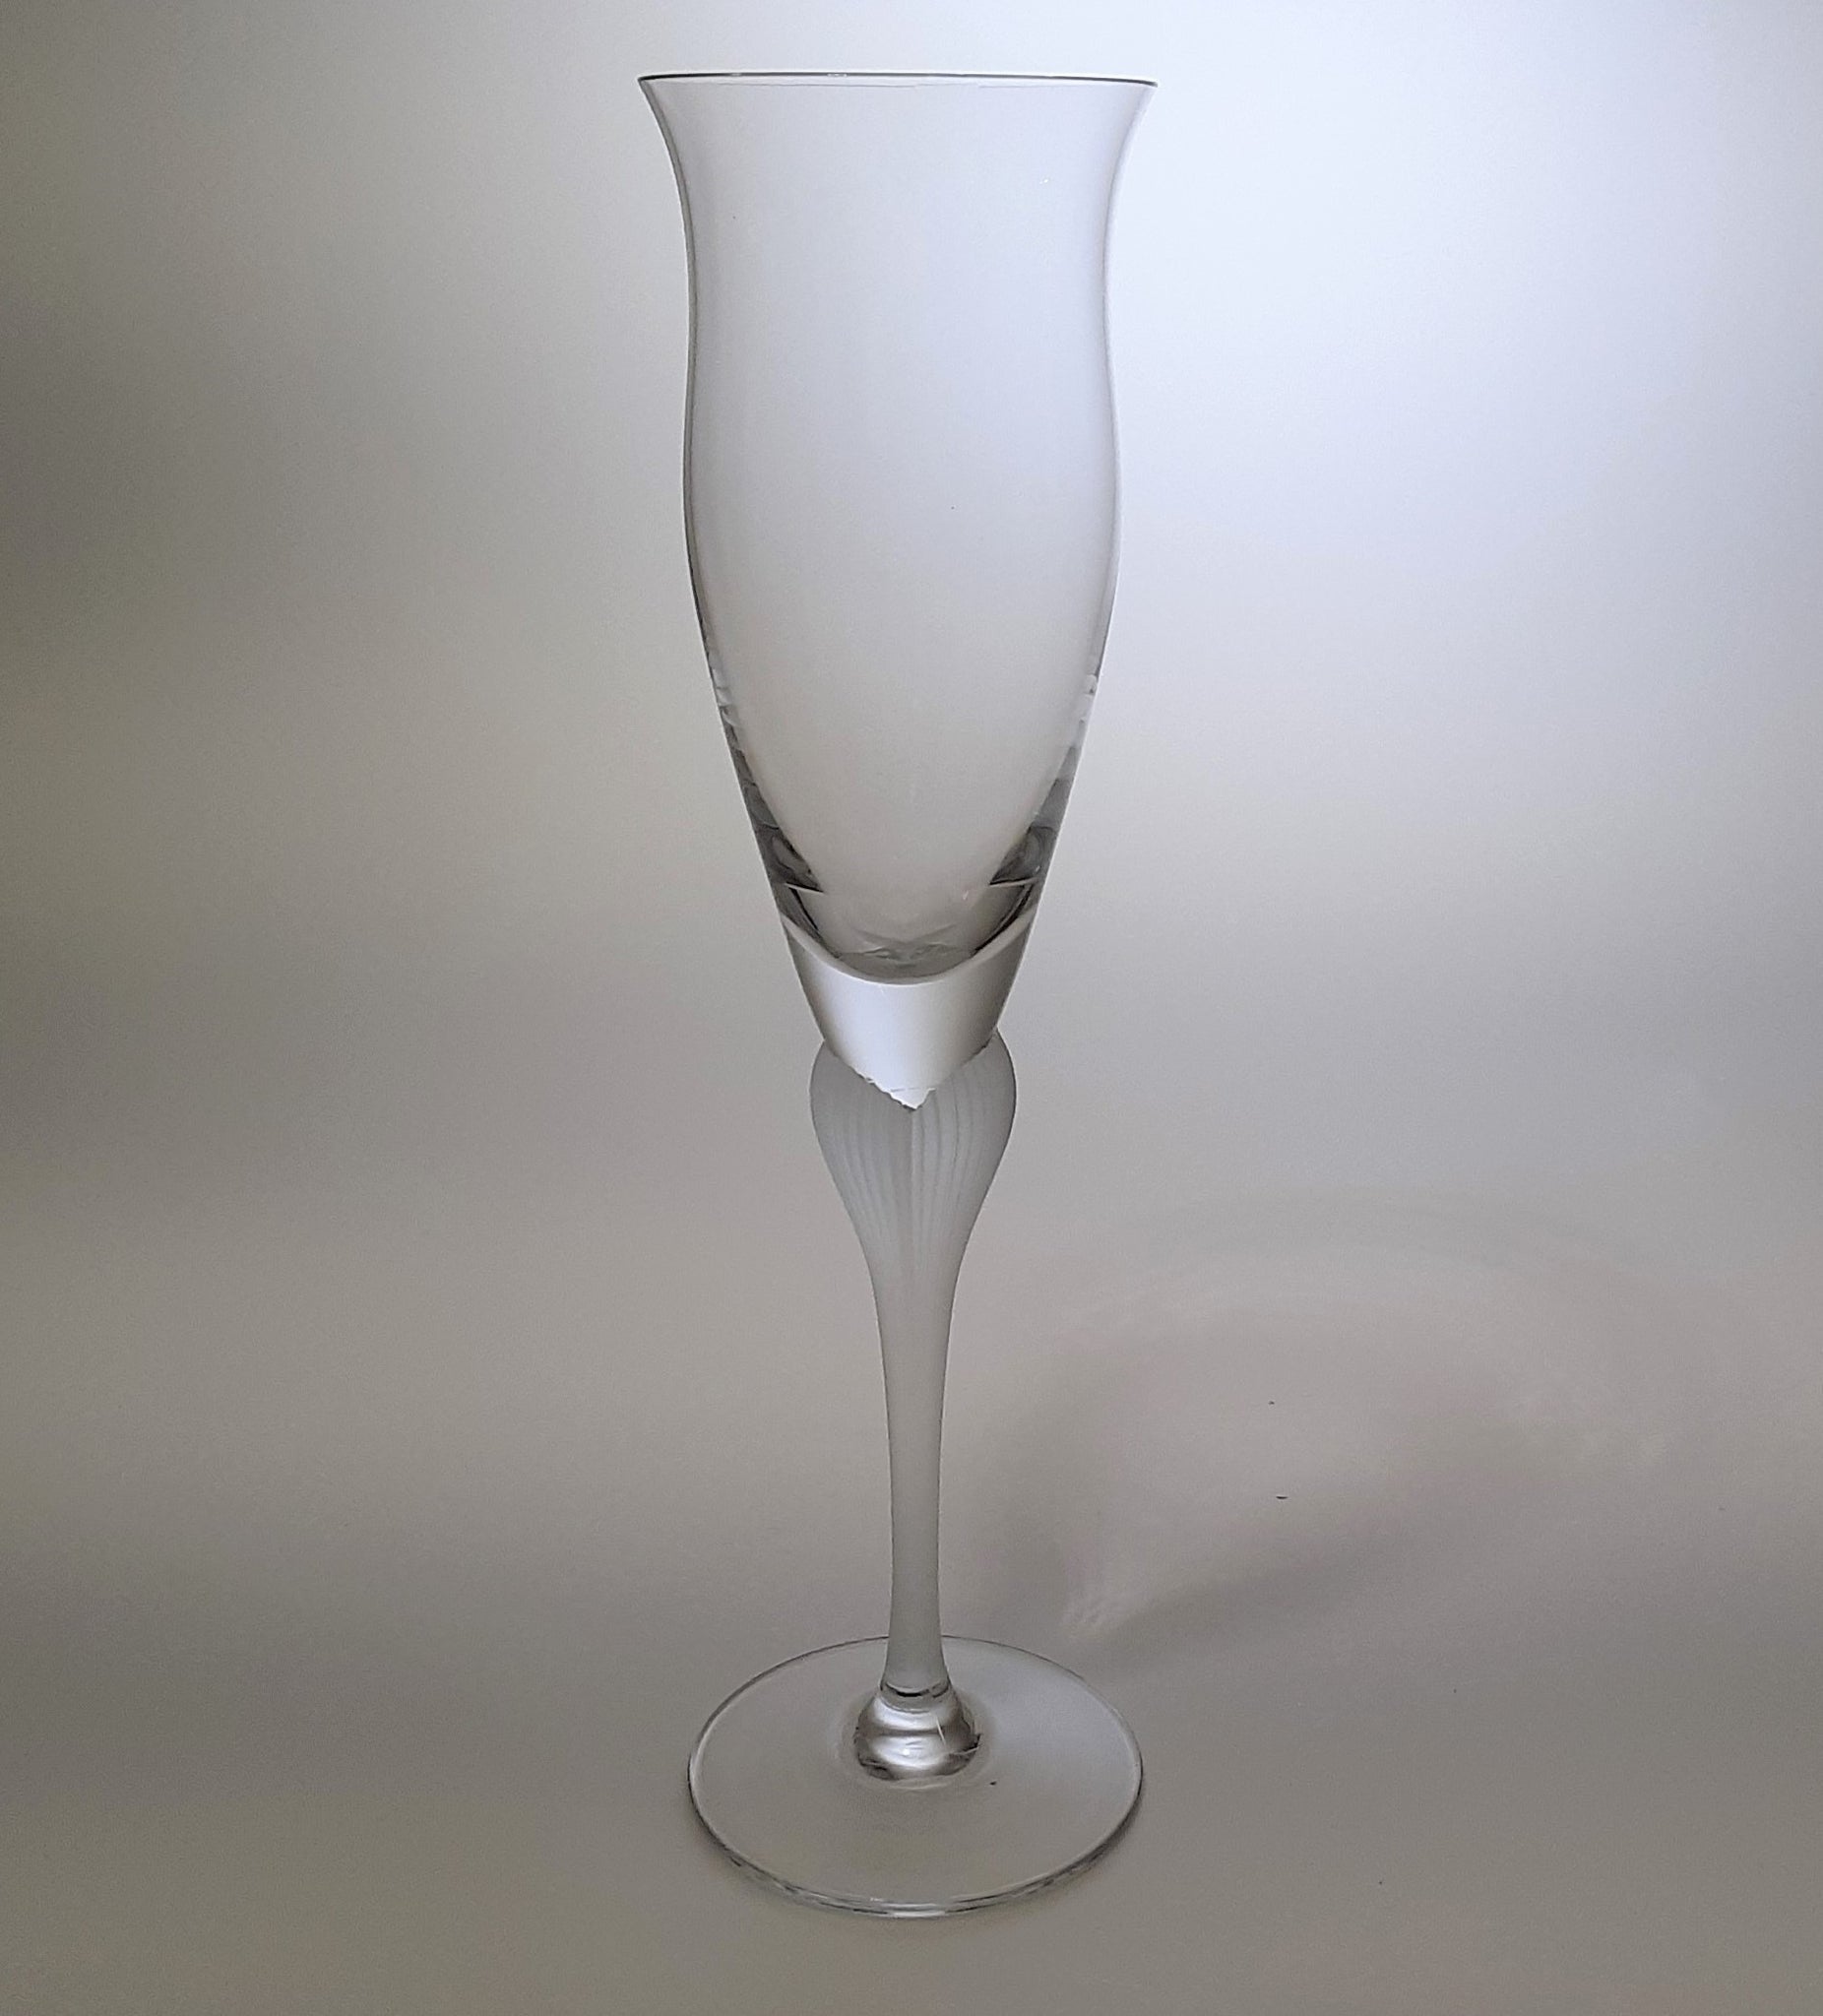 Mikasa 6749717 8 oz Clear Crystal Champagne Flutes